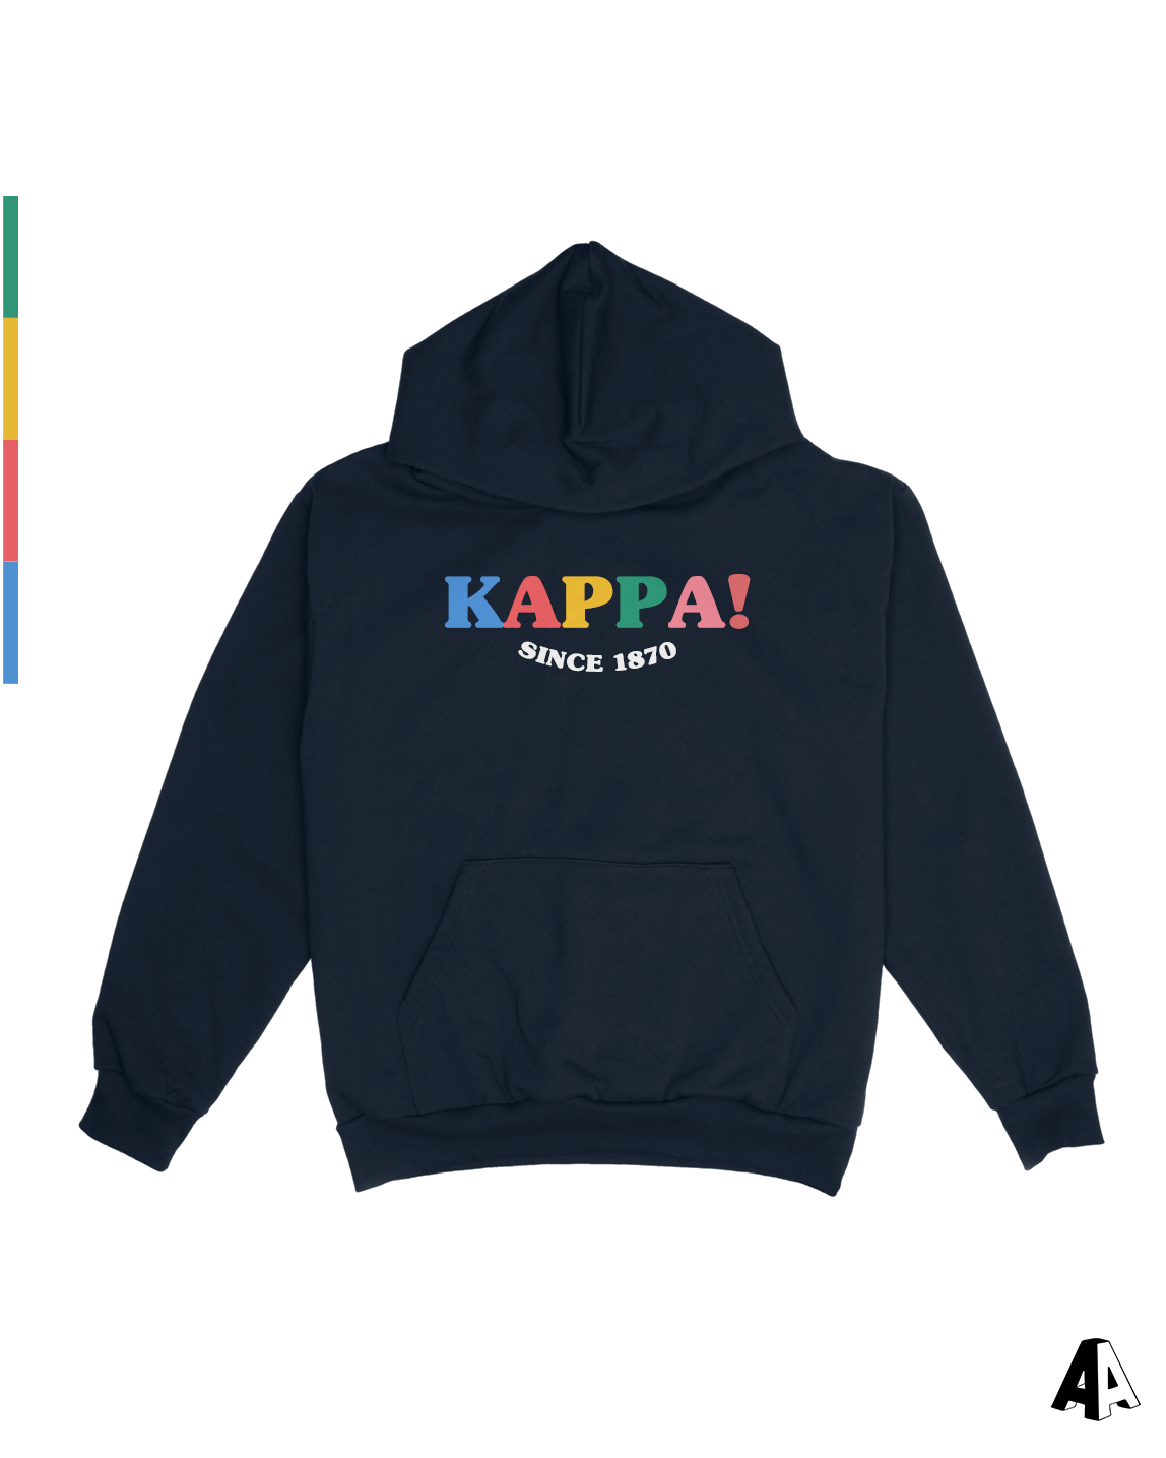 Happy! Hoodie Kappa Gamma • Apparel Company